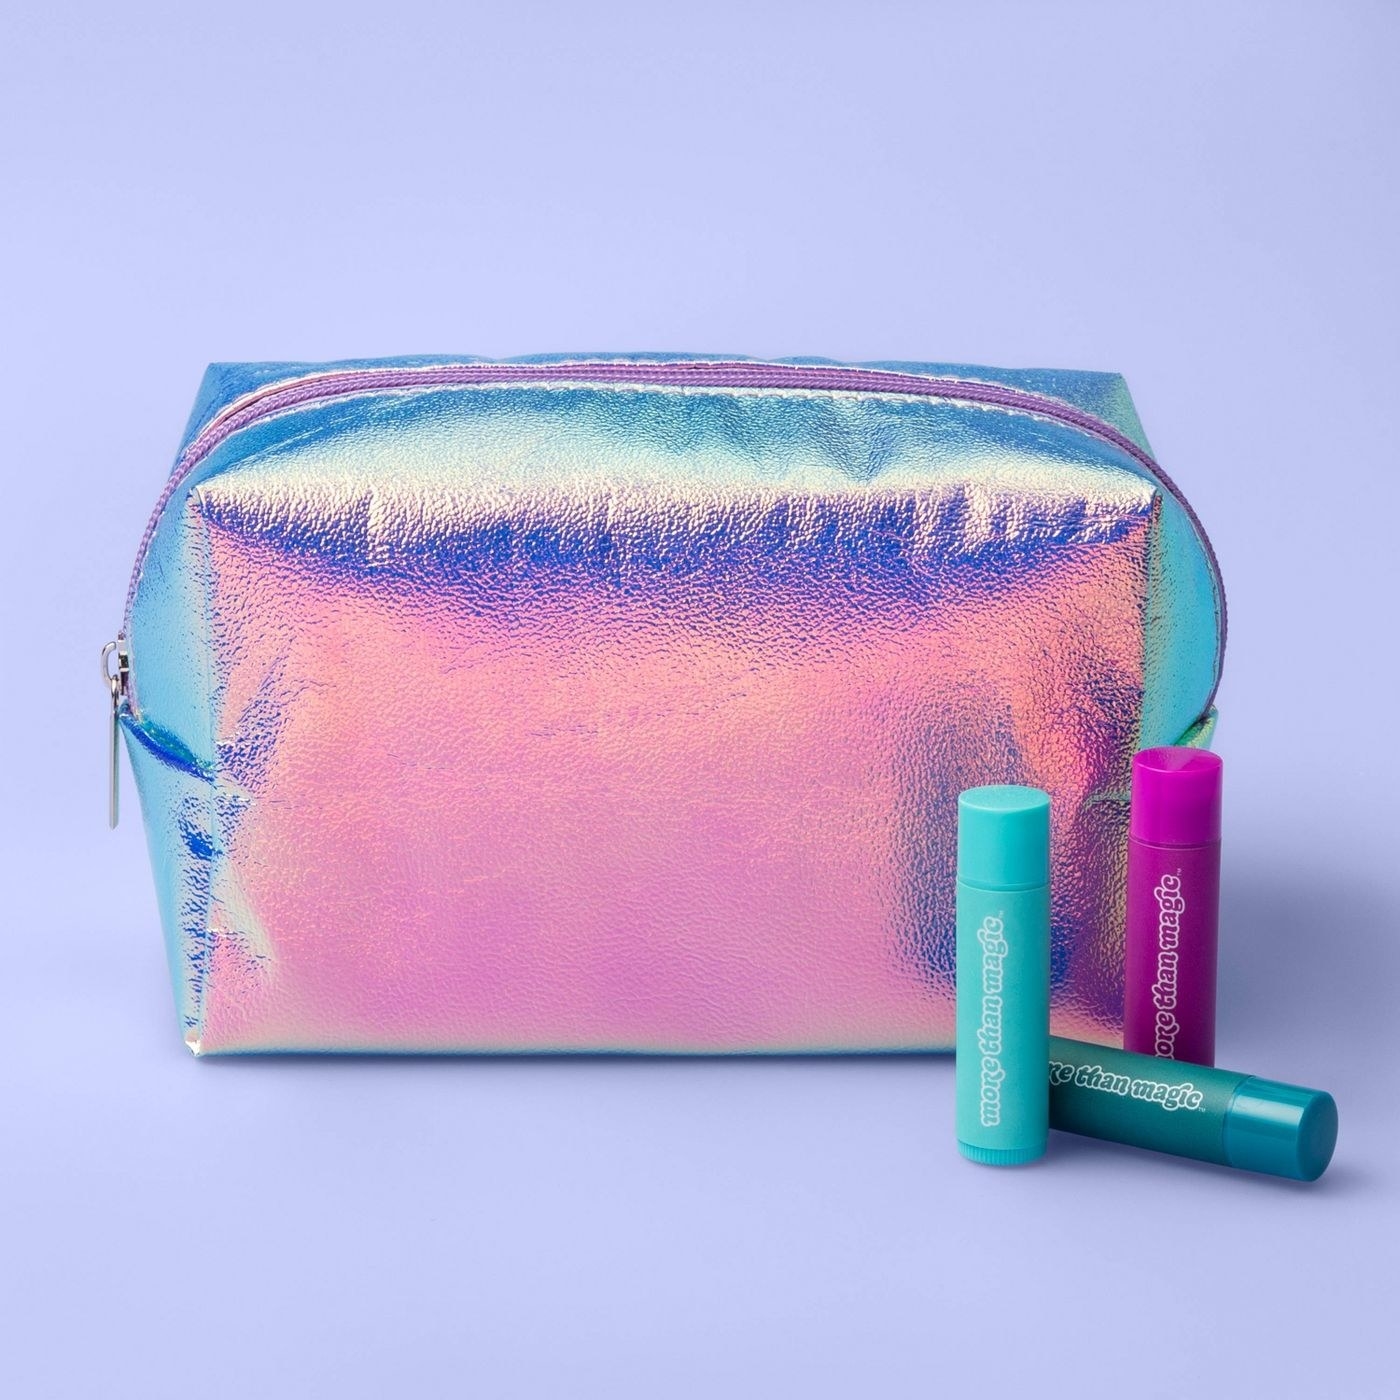 A holographic makeup bag on a purple backdrop